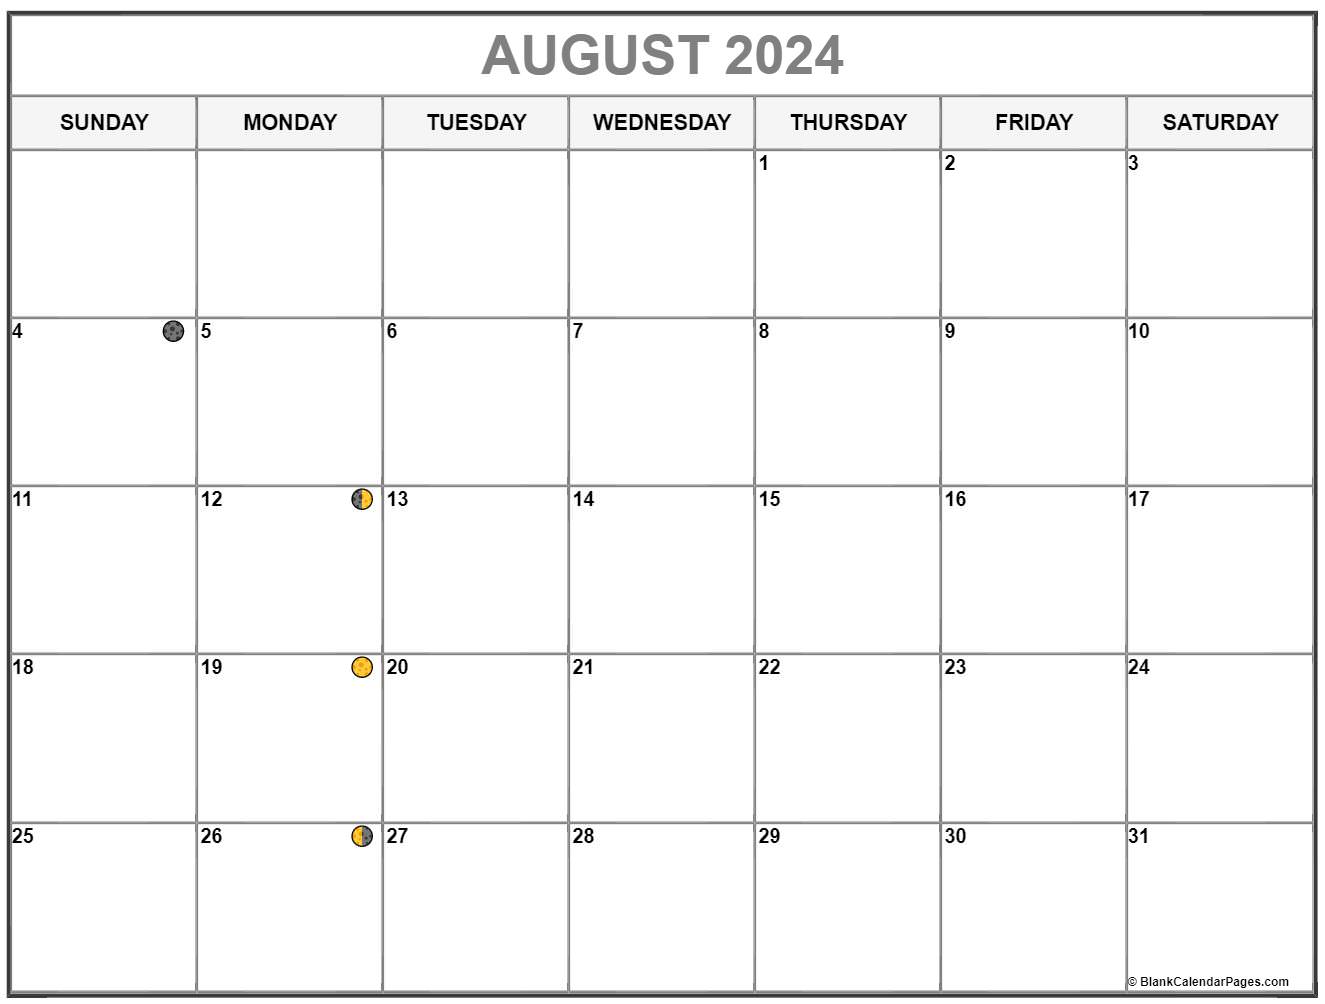 August 2024 Lunar Calendar | Moon Phase Calendar